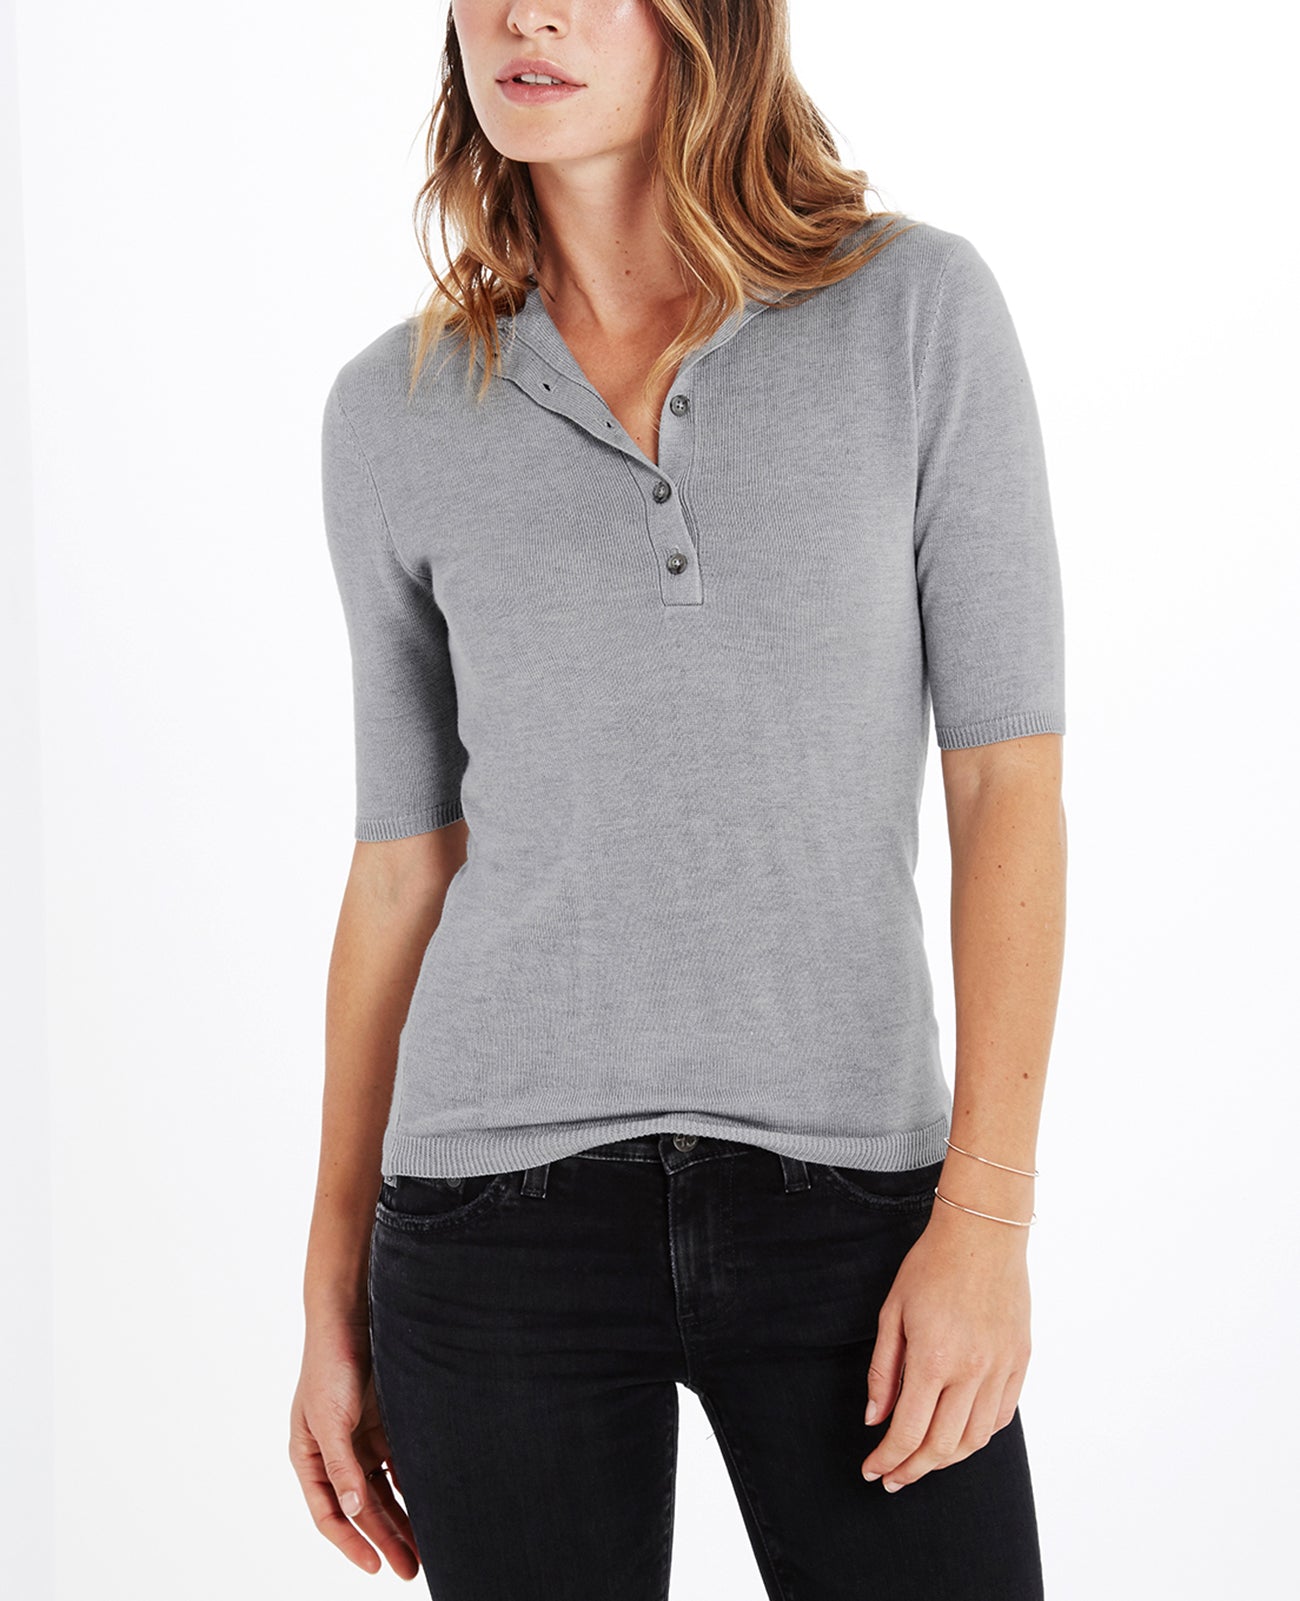 Chloe Heather Grey Short Sleeve Sweater Women Tops Photo 1